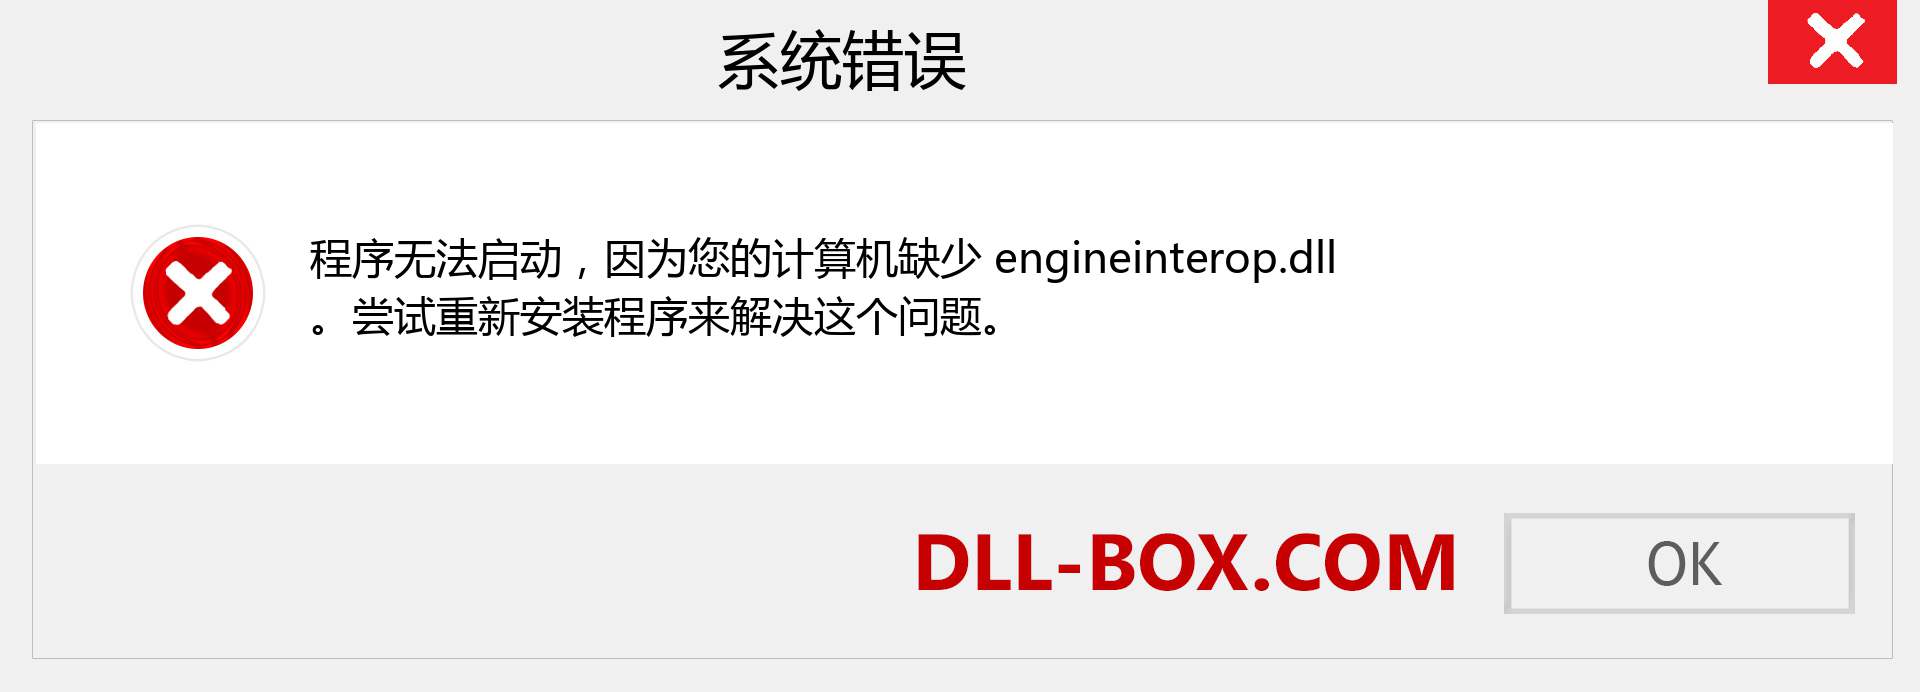 engineinterop.dll 文件丢失？。 适用于 Windows 7、8、10 的下载 - 修复 Windows、照片、图像上的 engineinterop dll 丢失错误